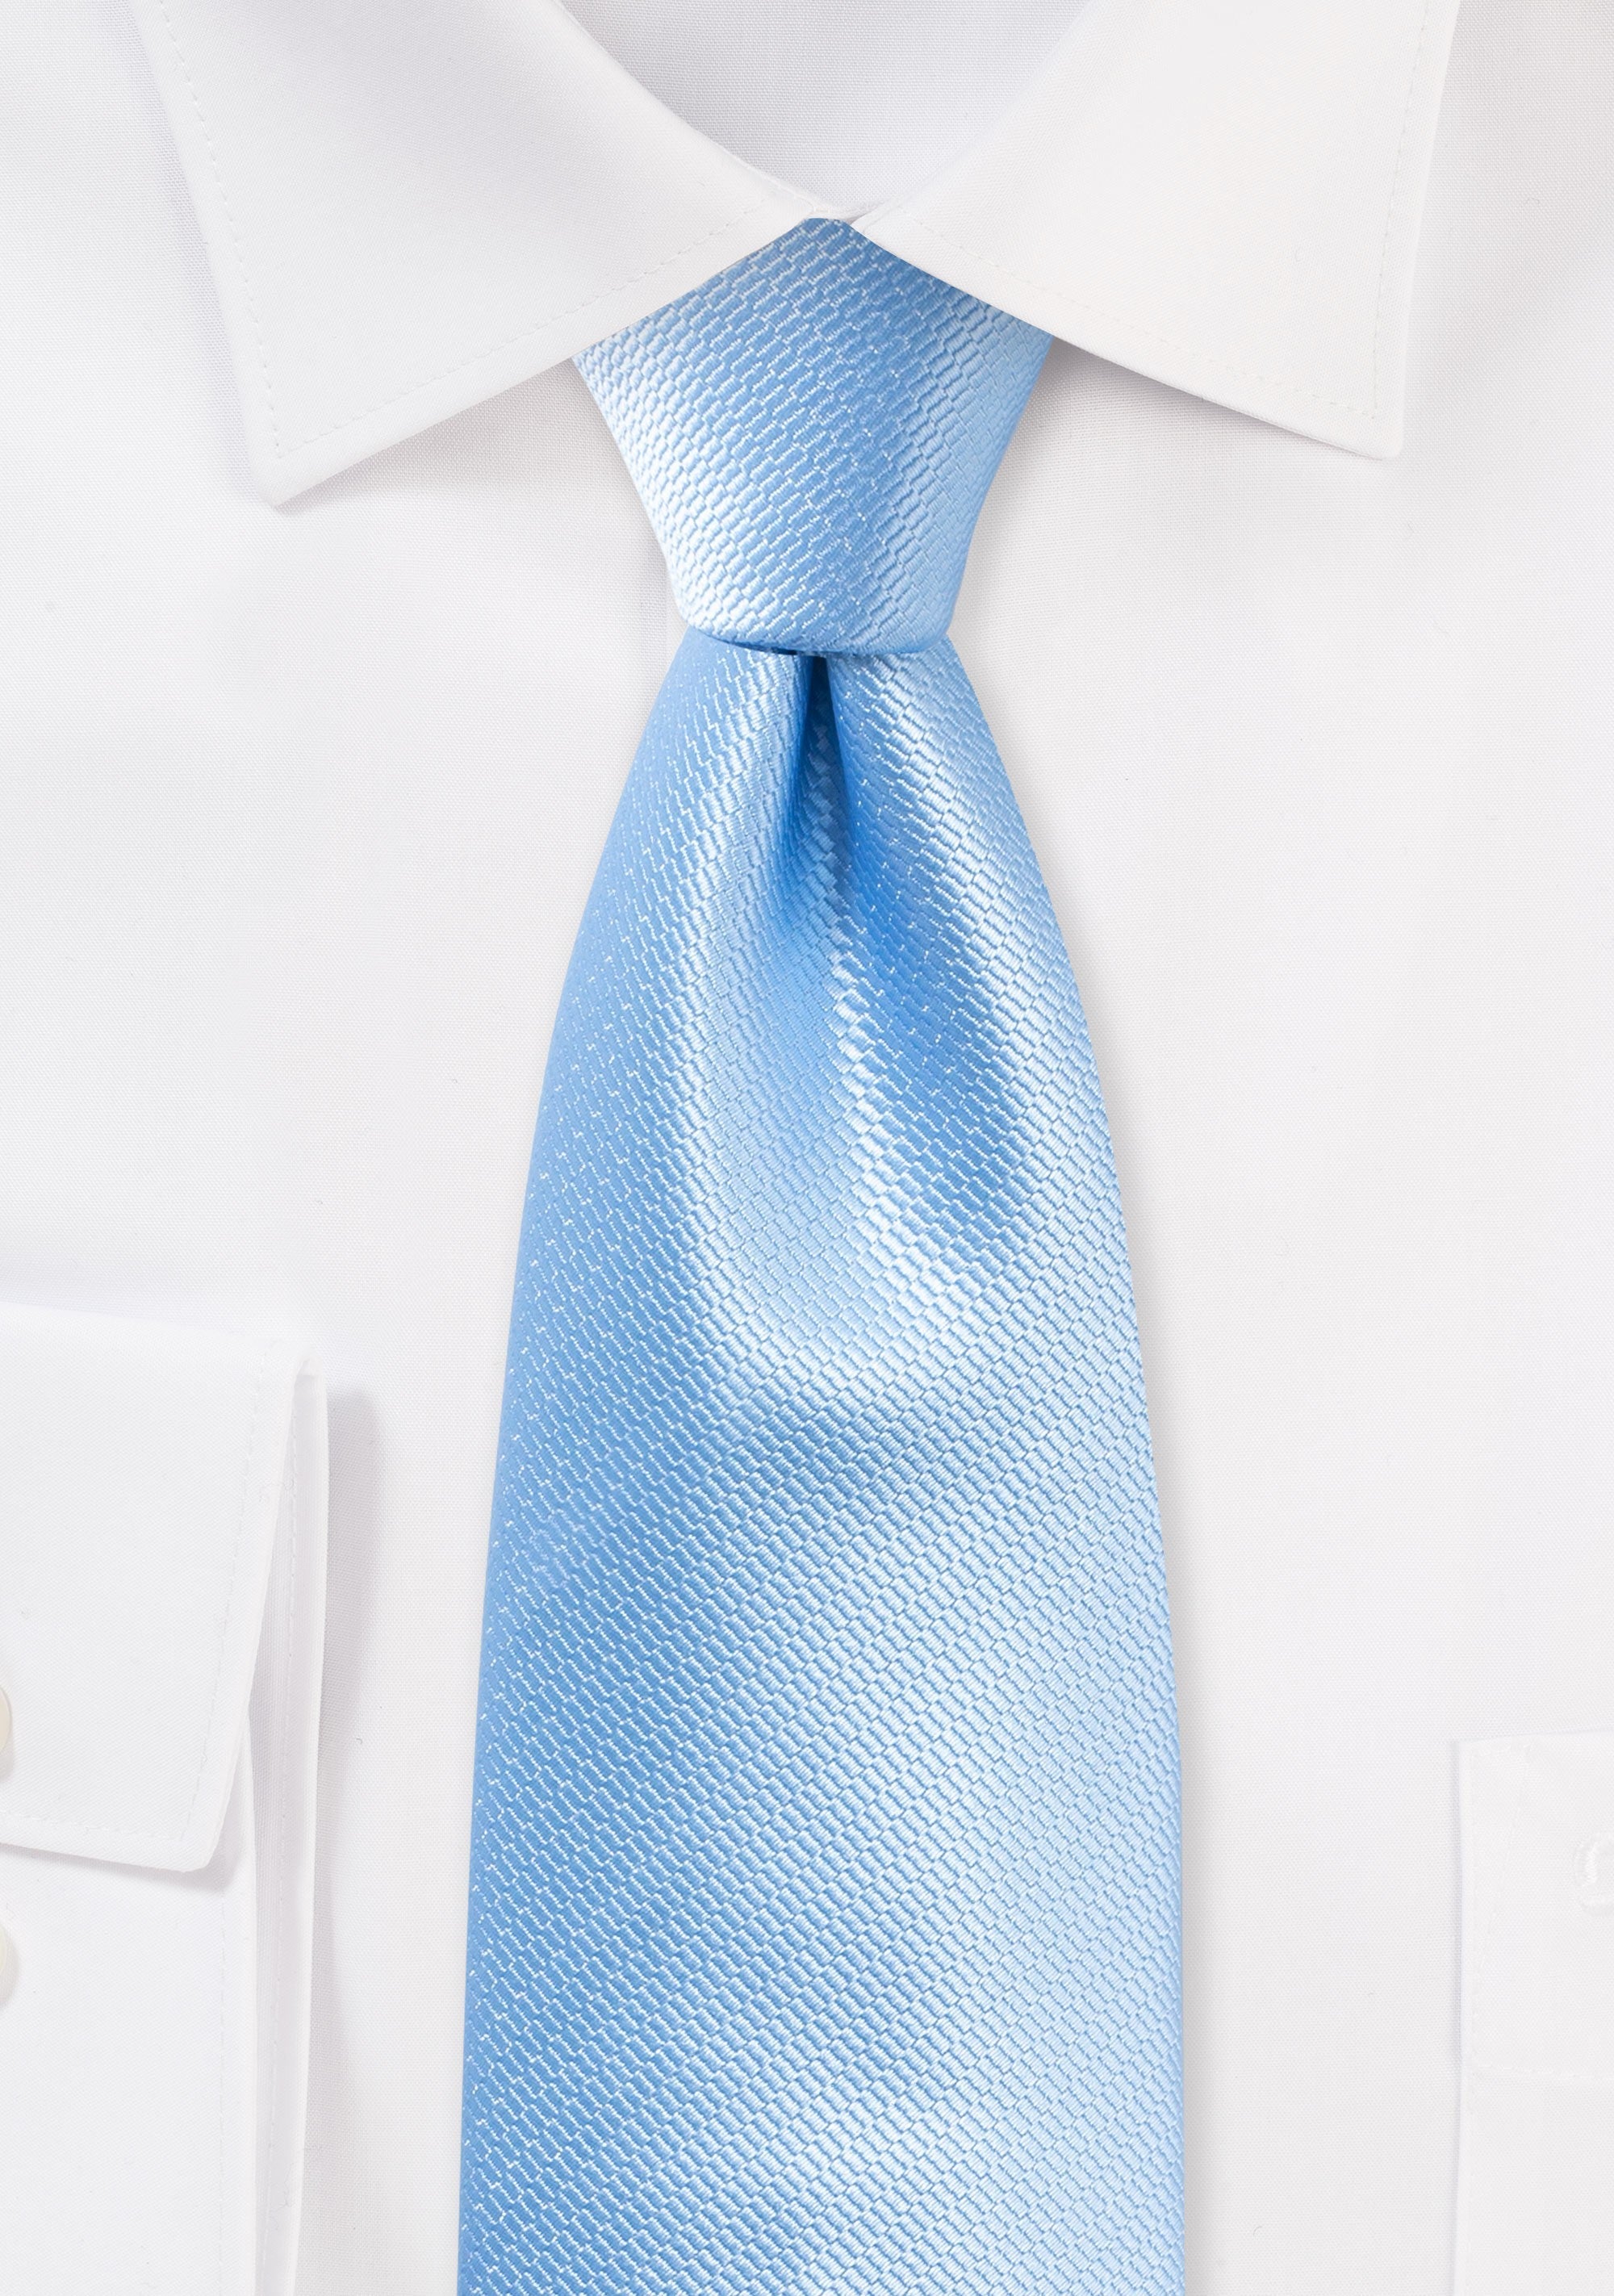 Capri Blue Small Texture Necktie